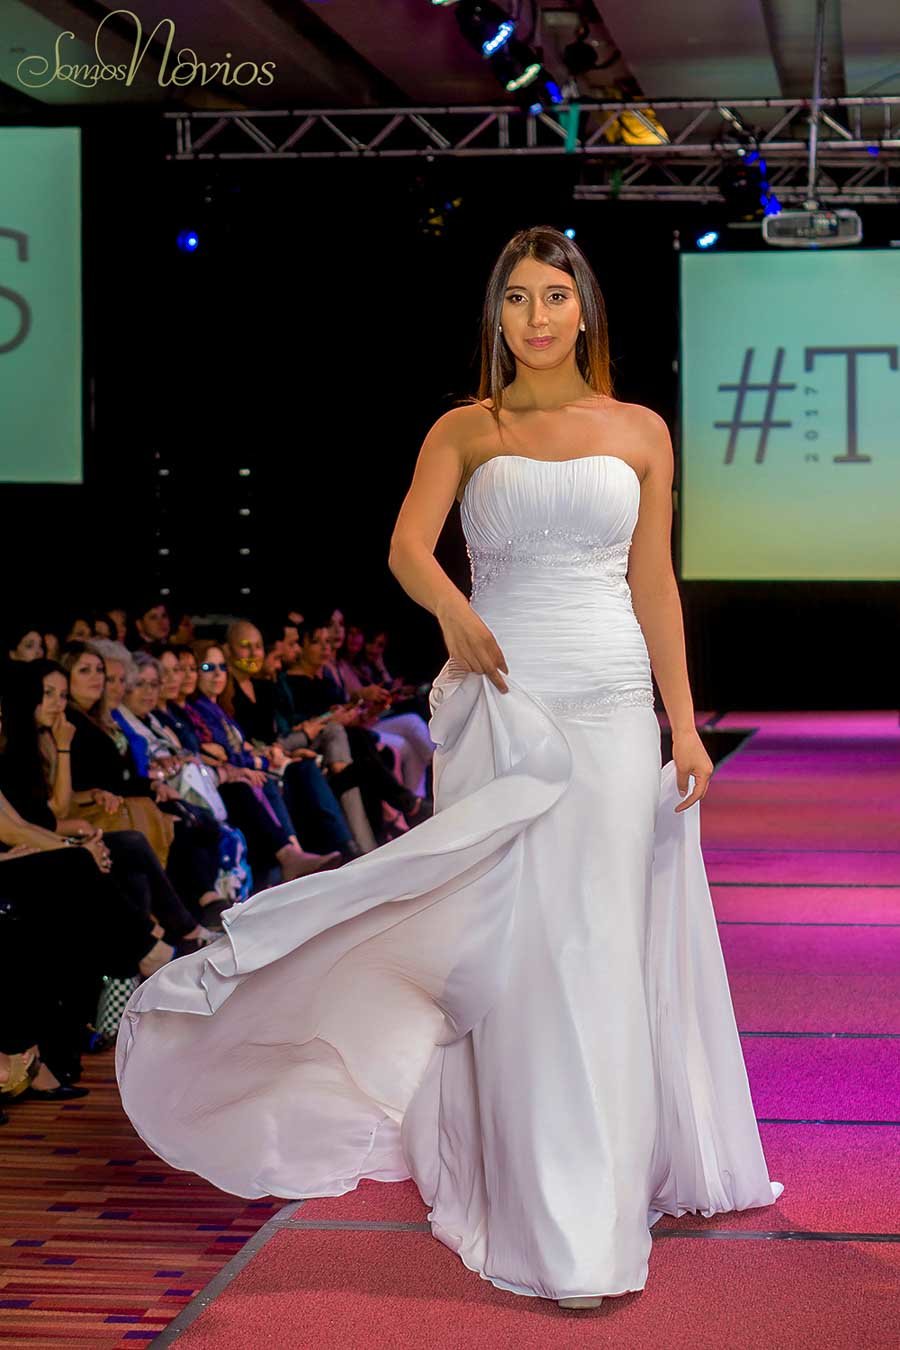 Modelo con vestido de novia blanco con capa de seda